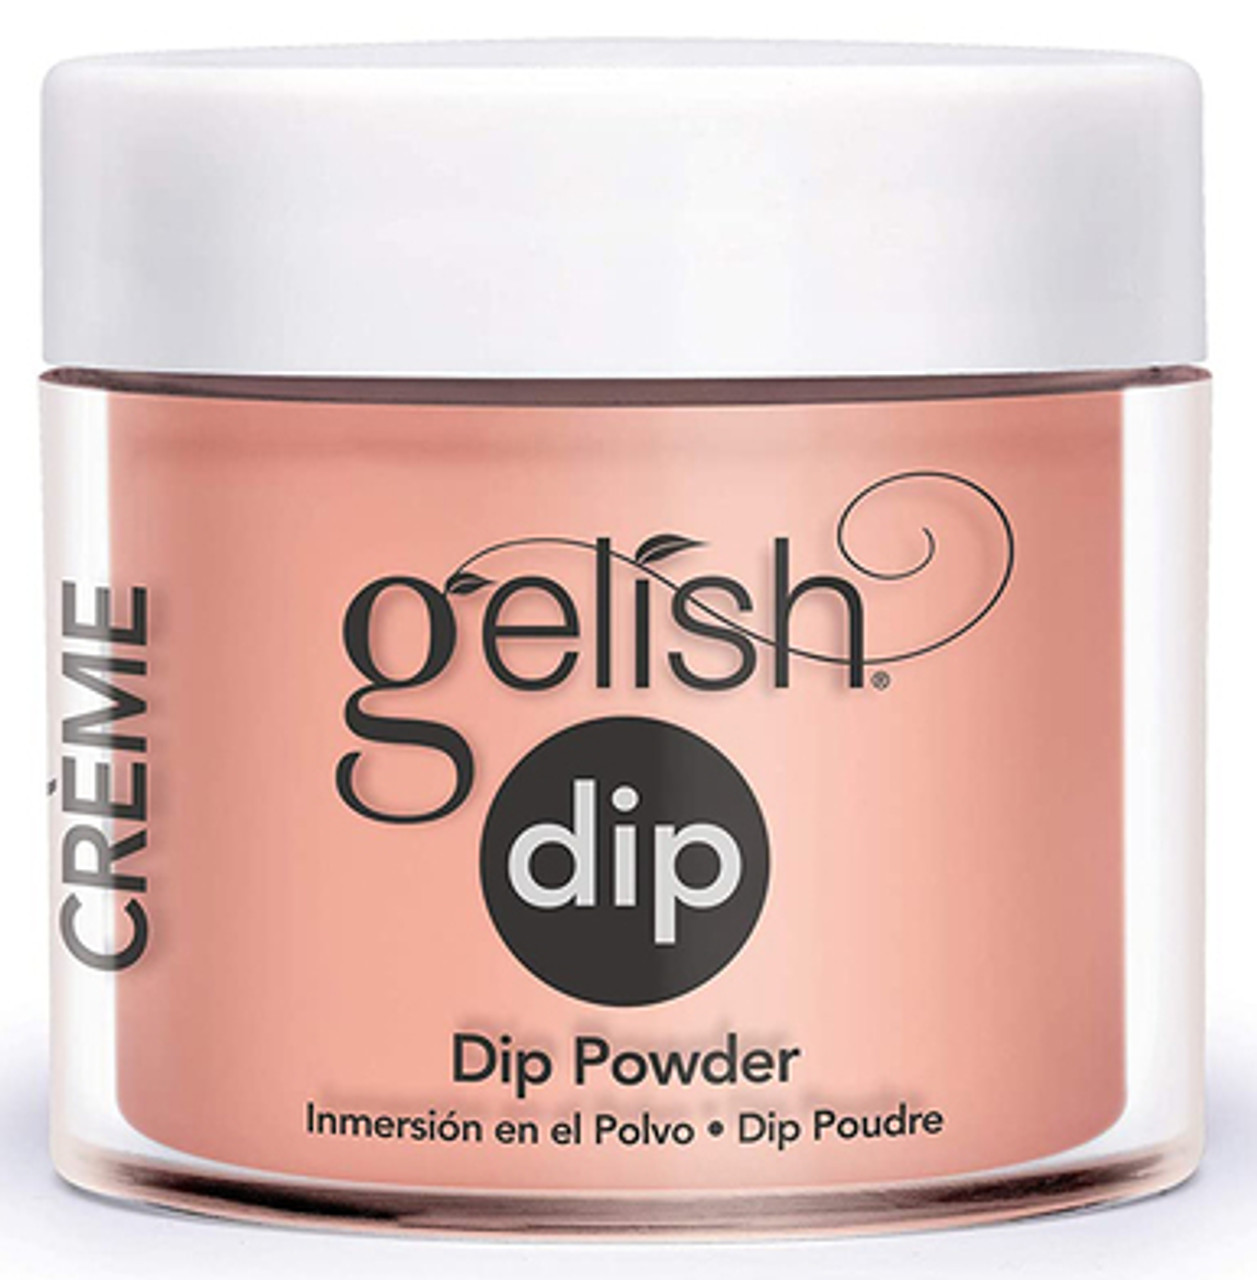 Gelish Dip Powder I'm Brighter Than You - 0.8 oz / 23 g